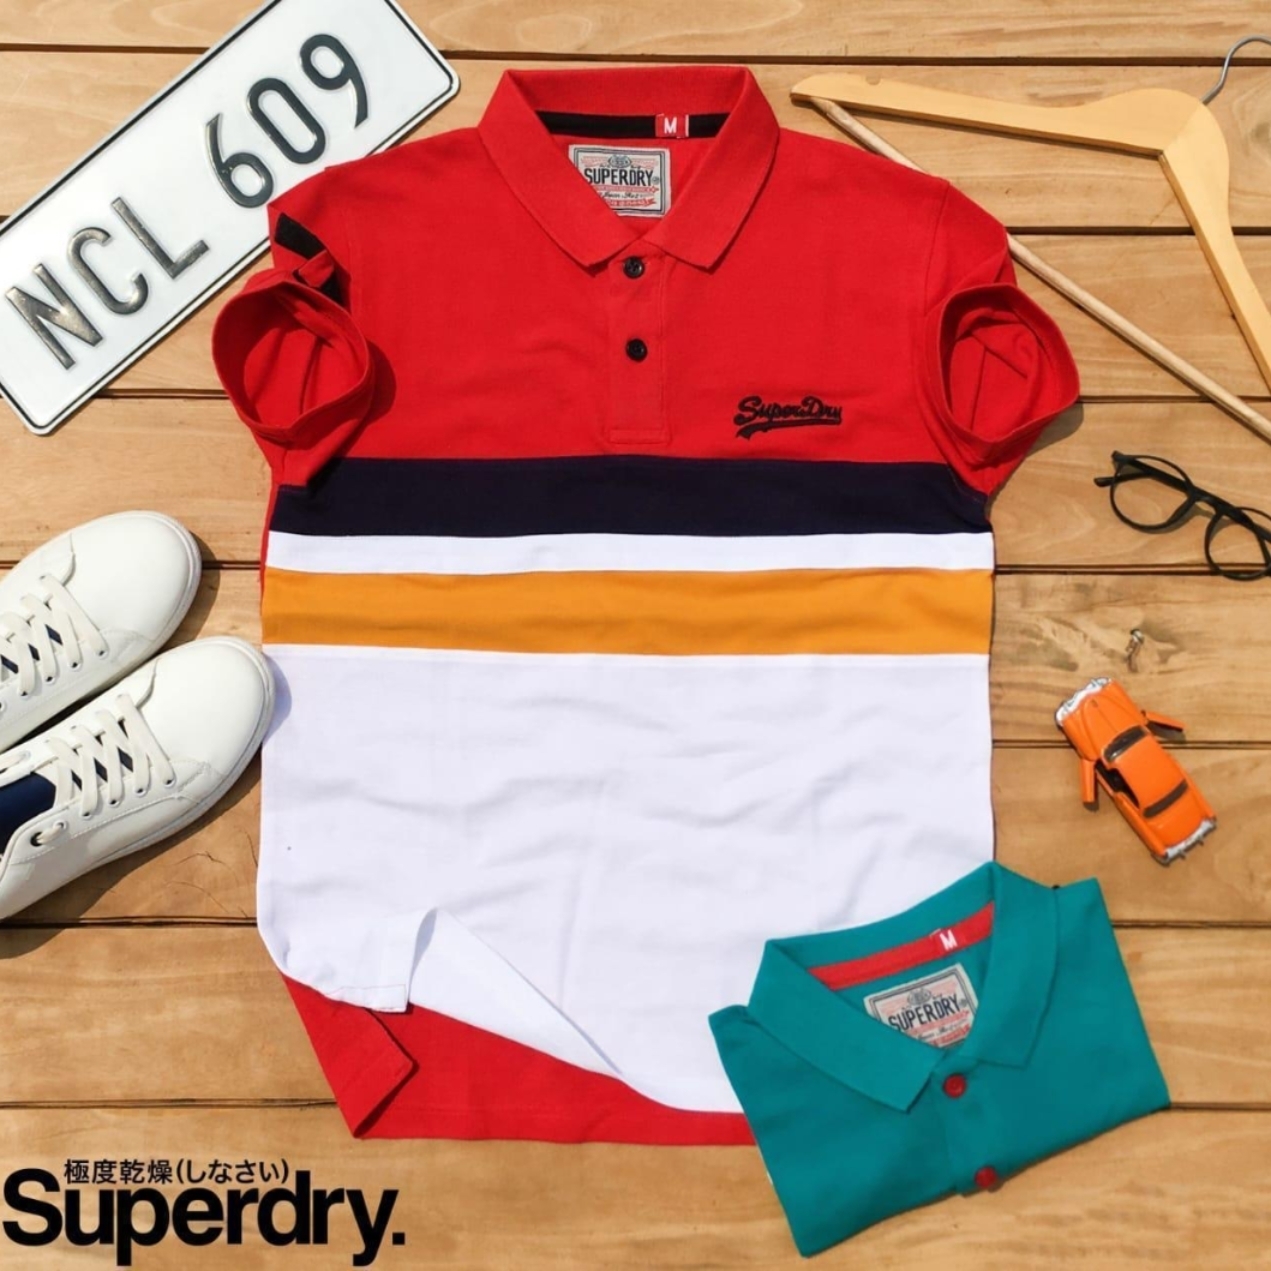 Superdry Shirts -144